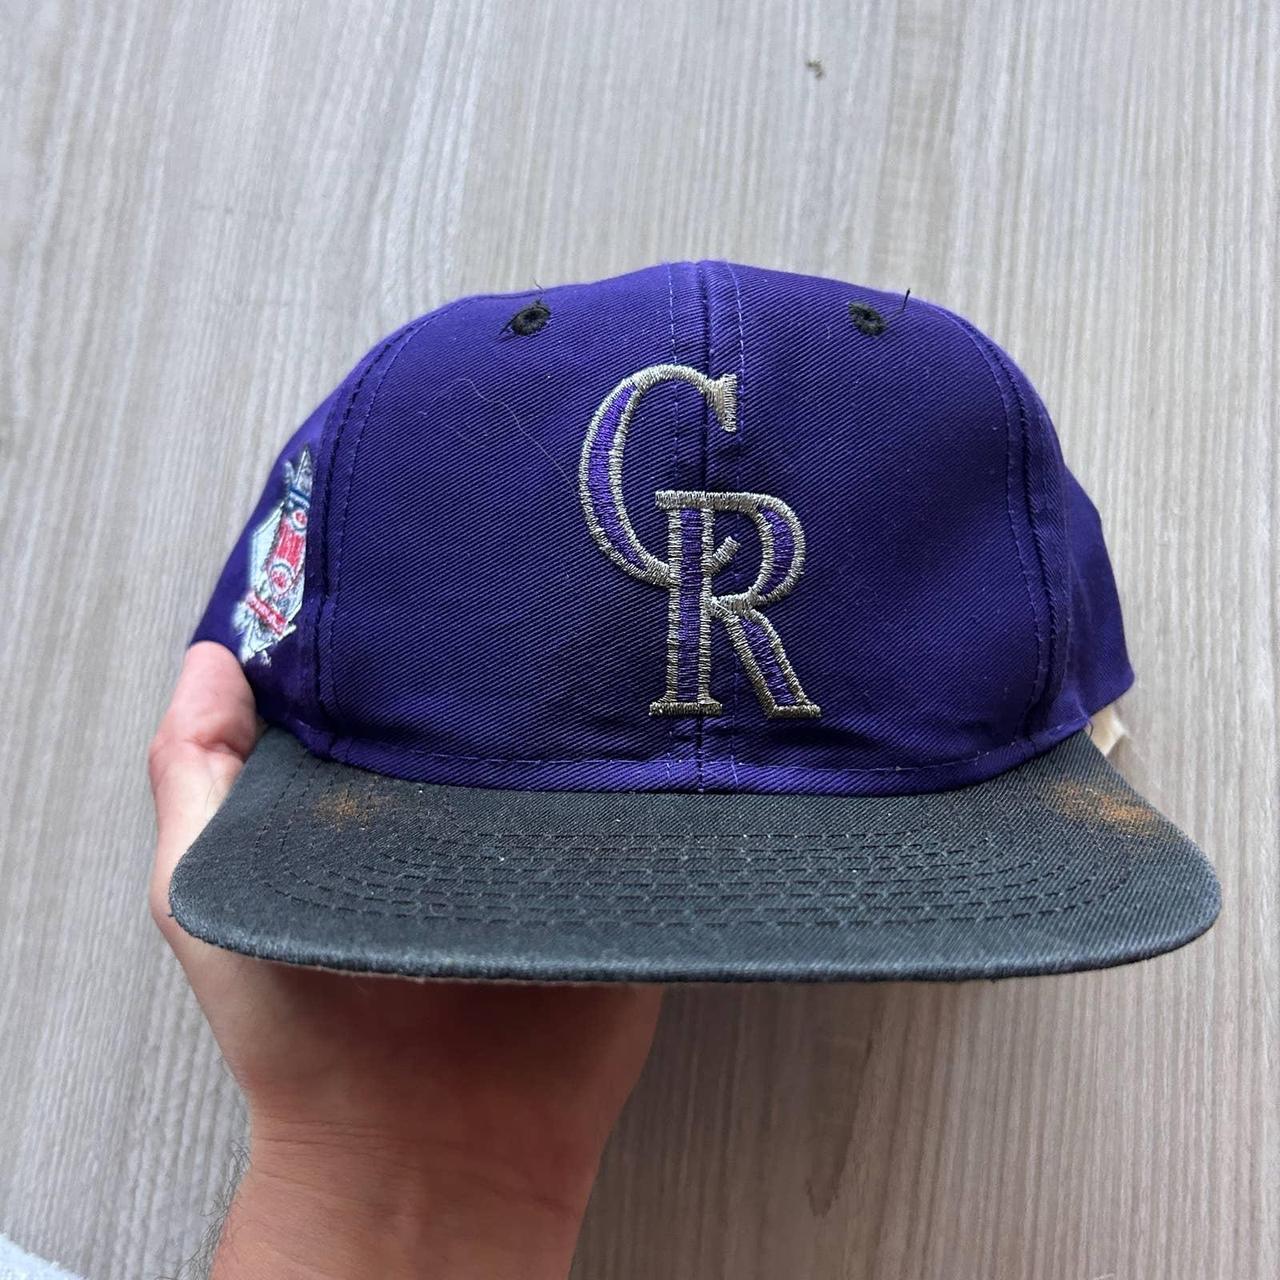 Vintage 1990s MLB Colorado Rockies Snapback Hat